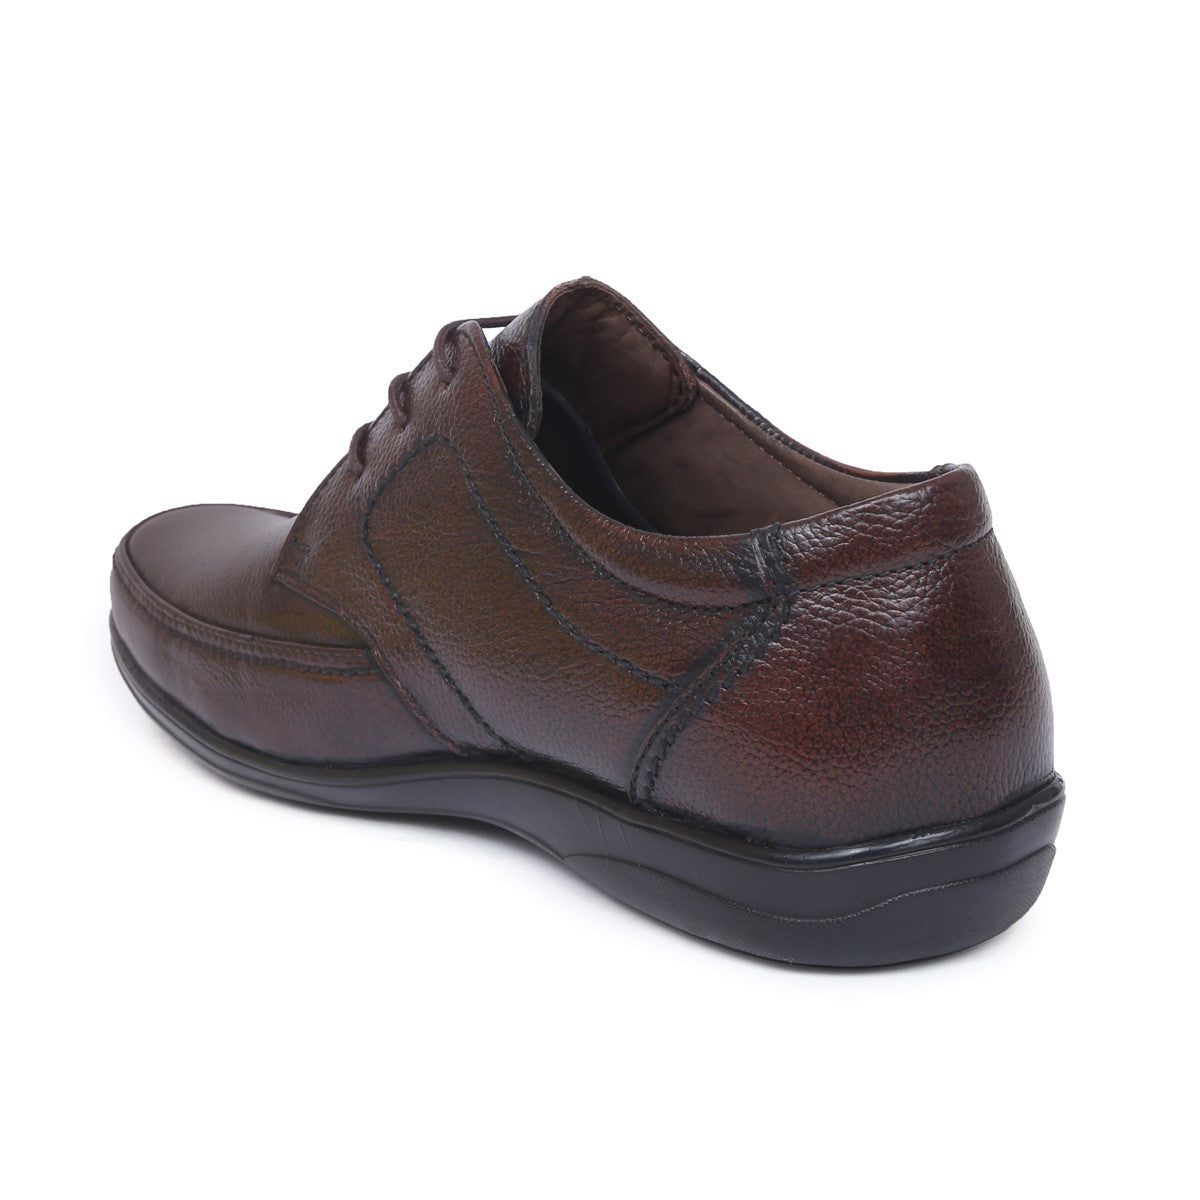 Formal Leather Shoes for Men D-3151